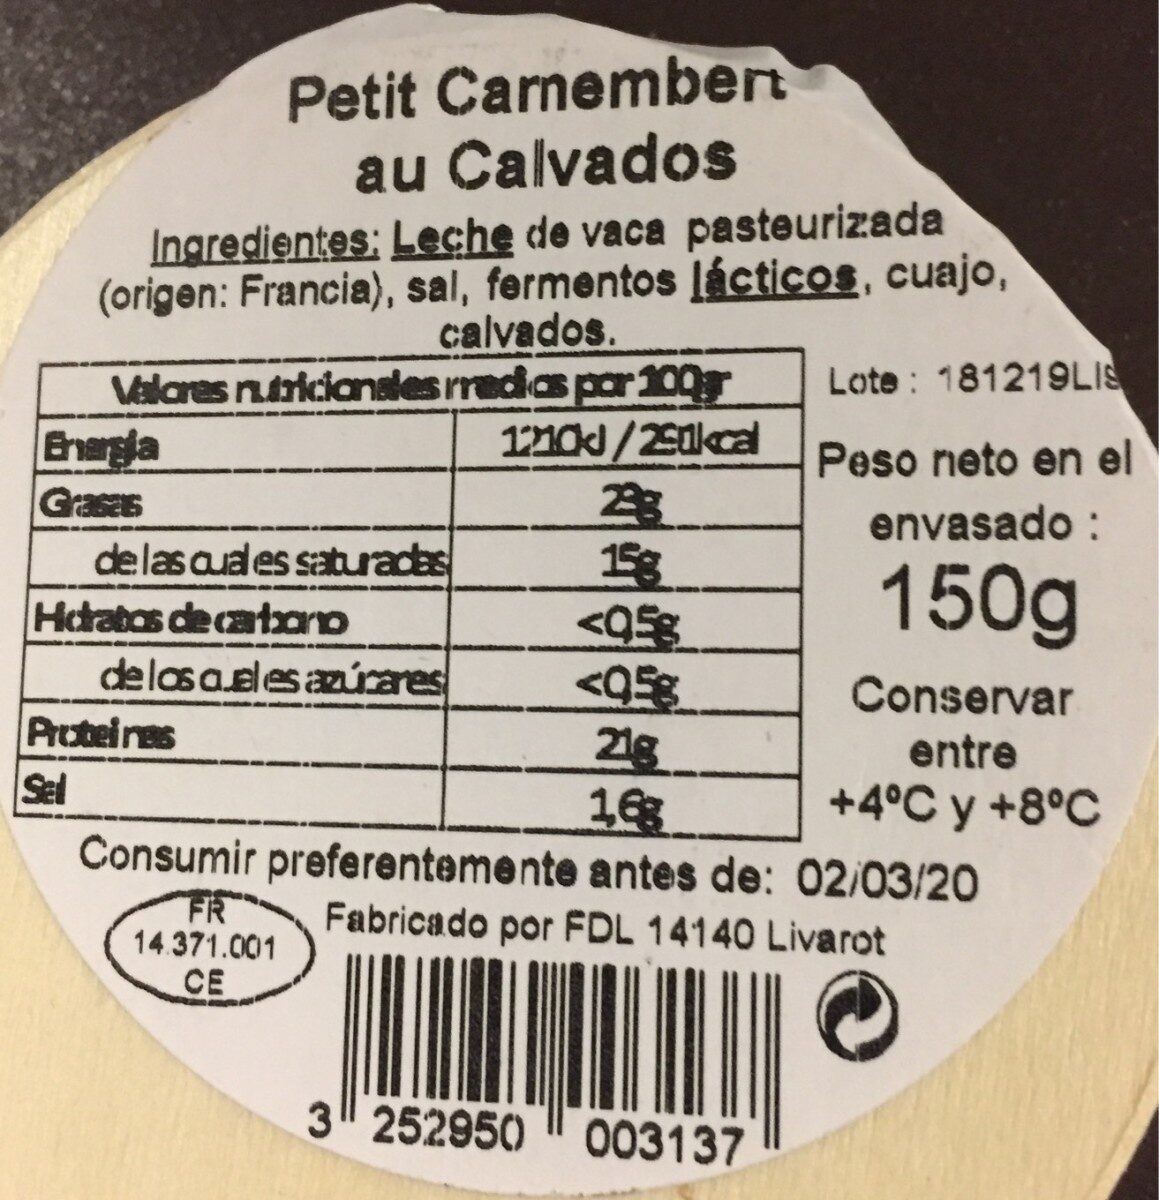 Petit camembert au Calvados - Nutrition facts - es